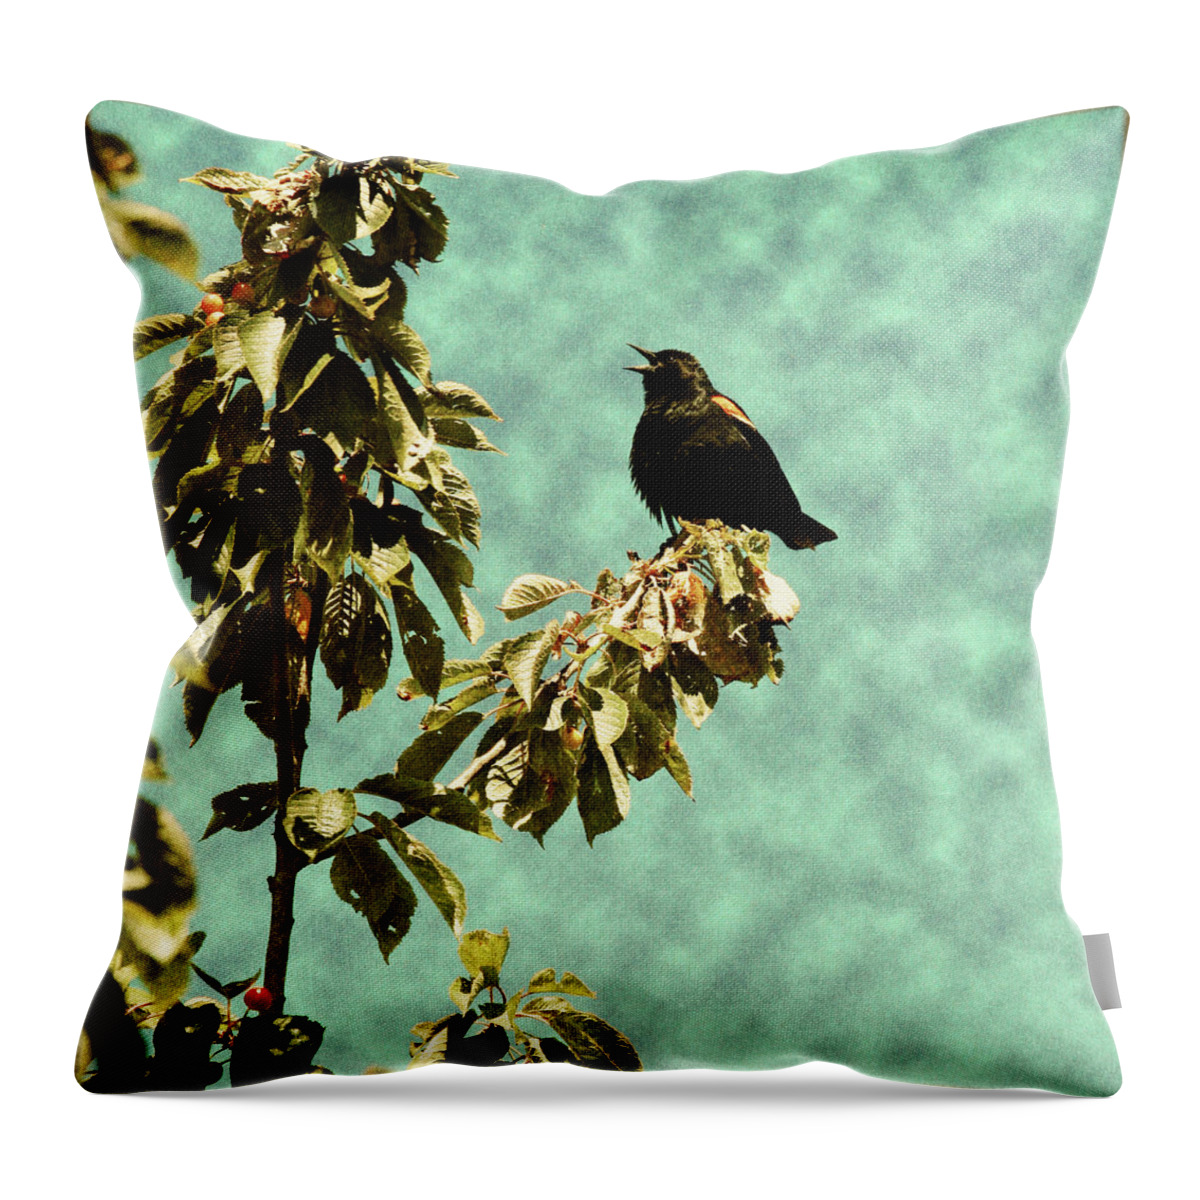 Redwing Blackbird Throw Pillow featuring the photograph Blackbird's Song by Bonnie Bruno